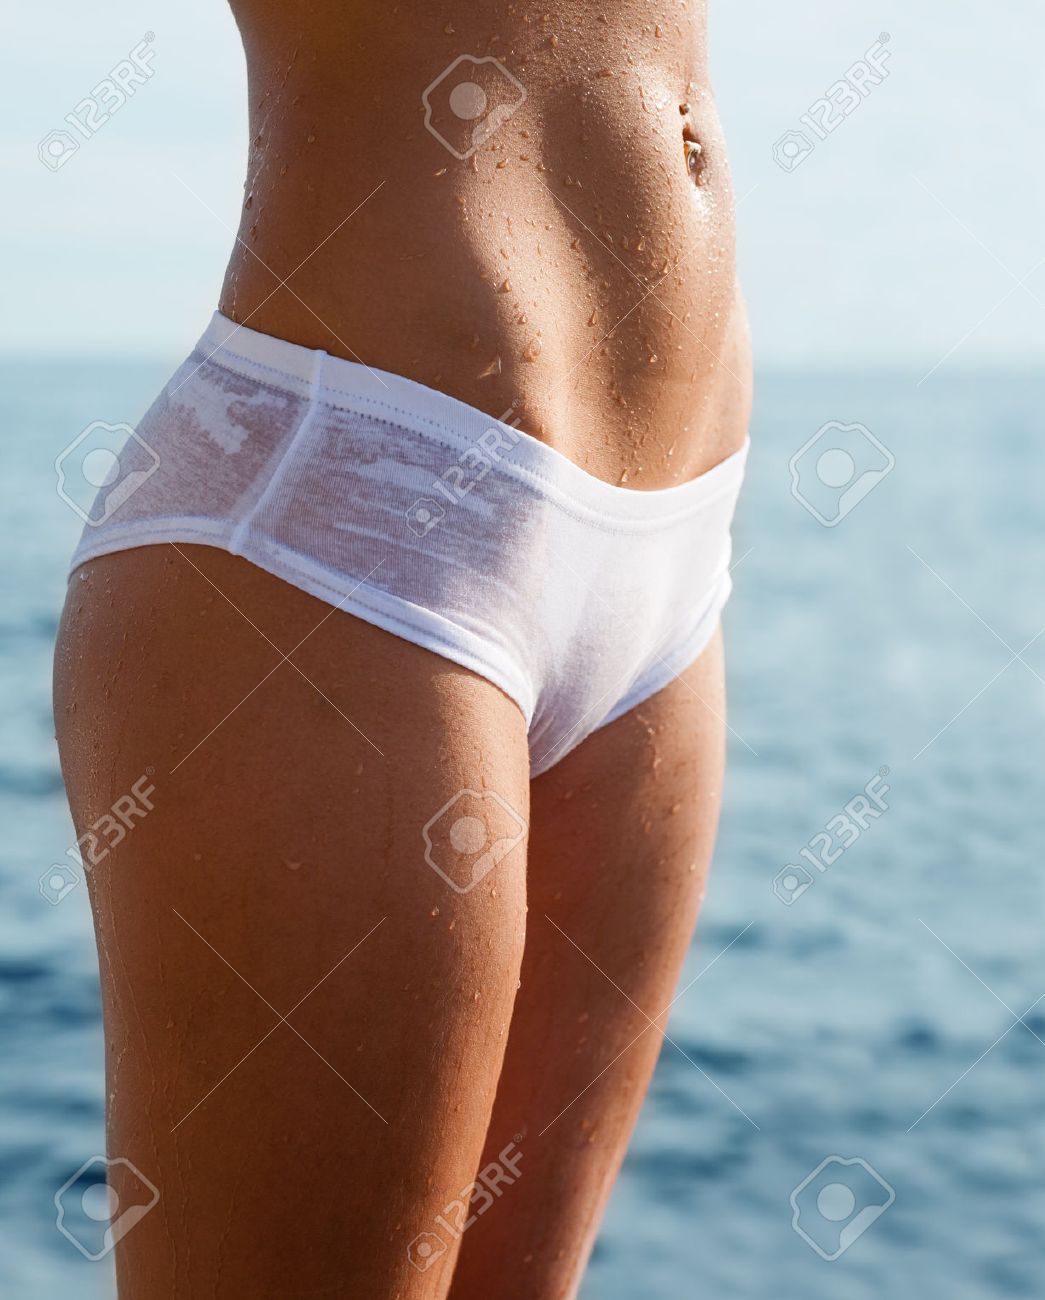 abel ejiro share white wet panties photos